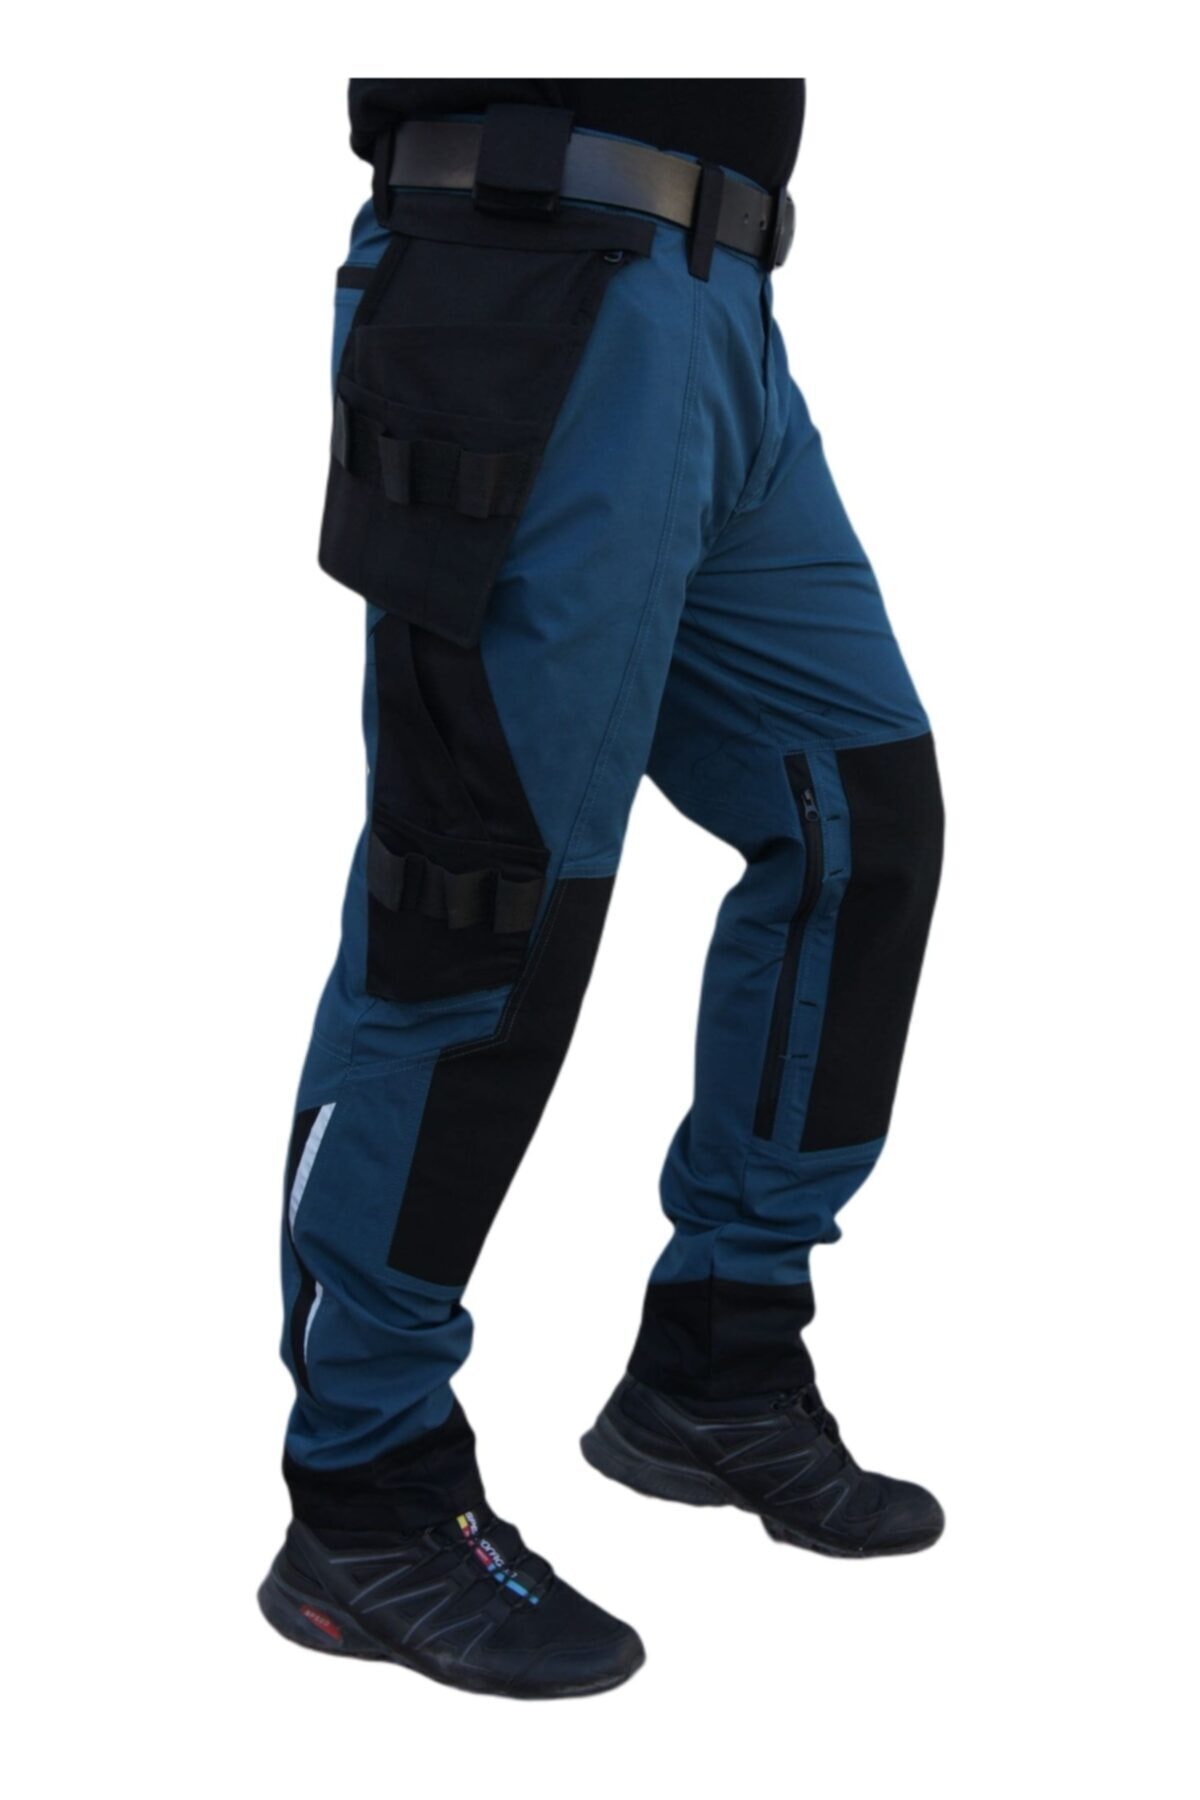 Uniprom Iş Pantolonu Likralı Manchester Model Indigo-siyah